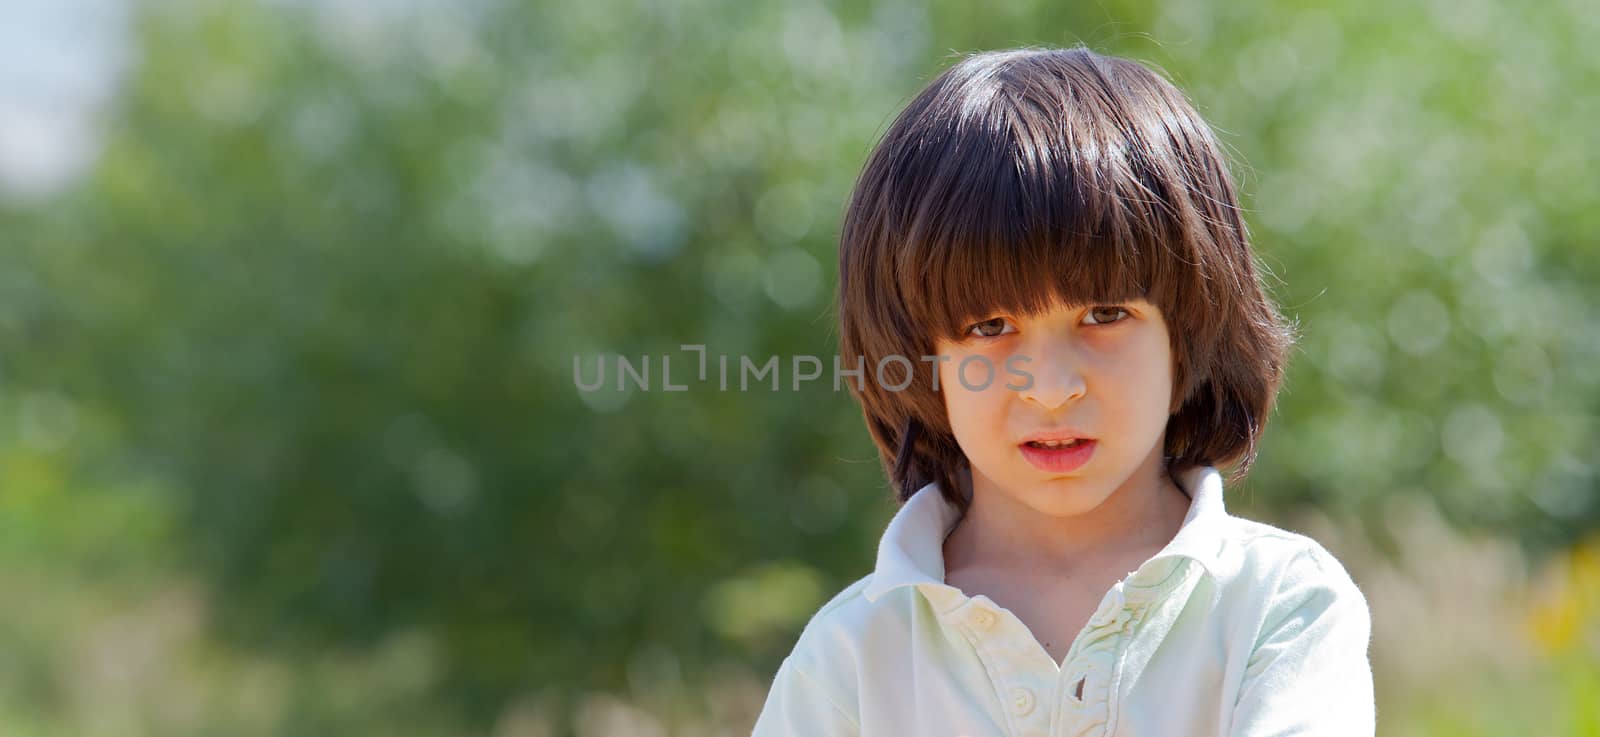 Portrait of a boy on a green background